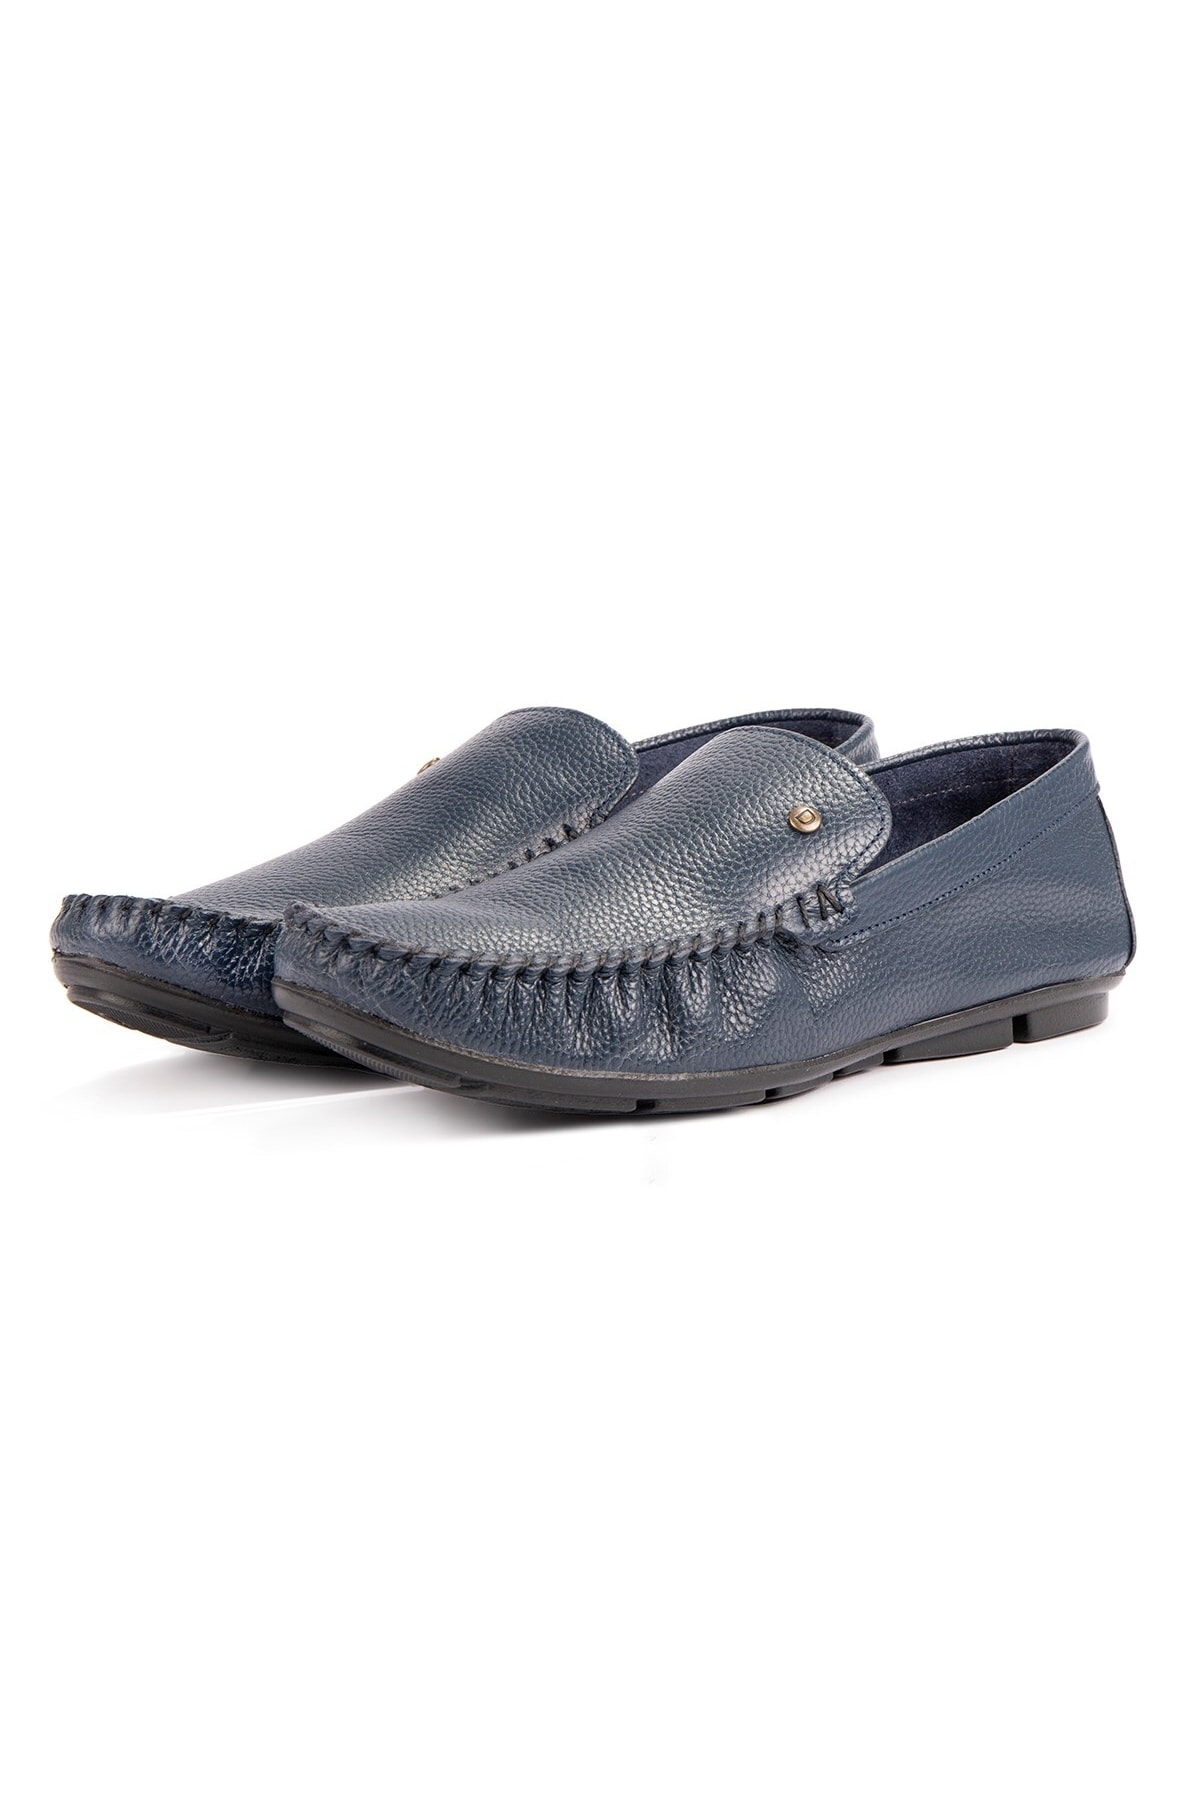 Levně Ducavelli Attic Genuine Leather Men's Casual Shoes, Rok Loafers Shoes Navy.